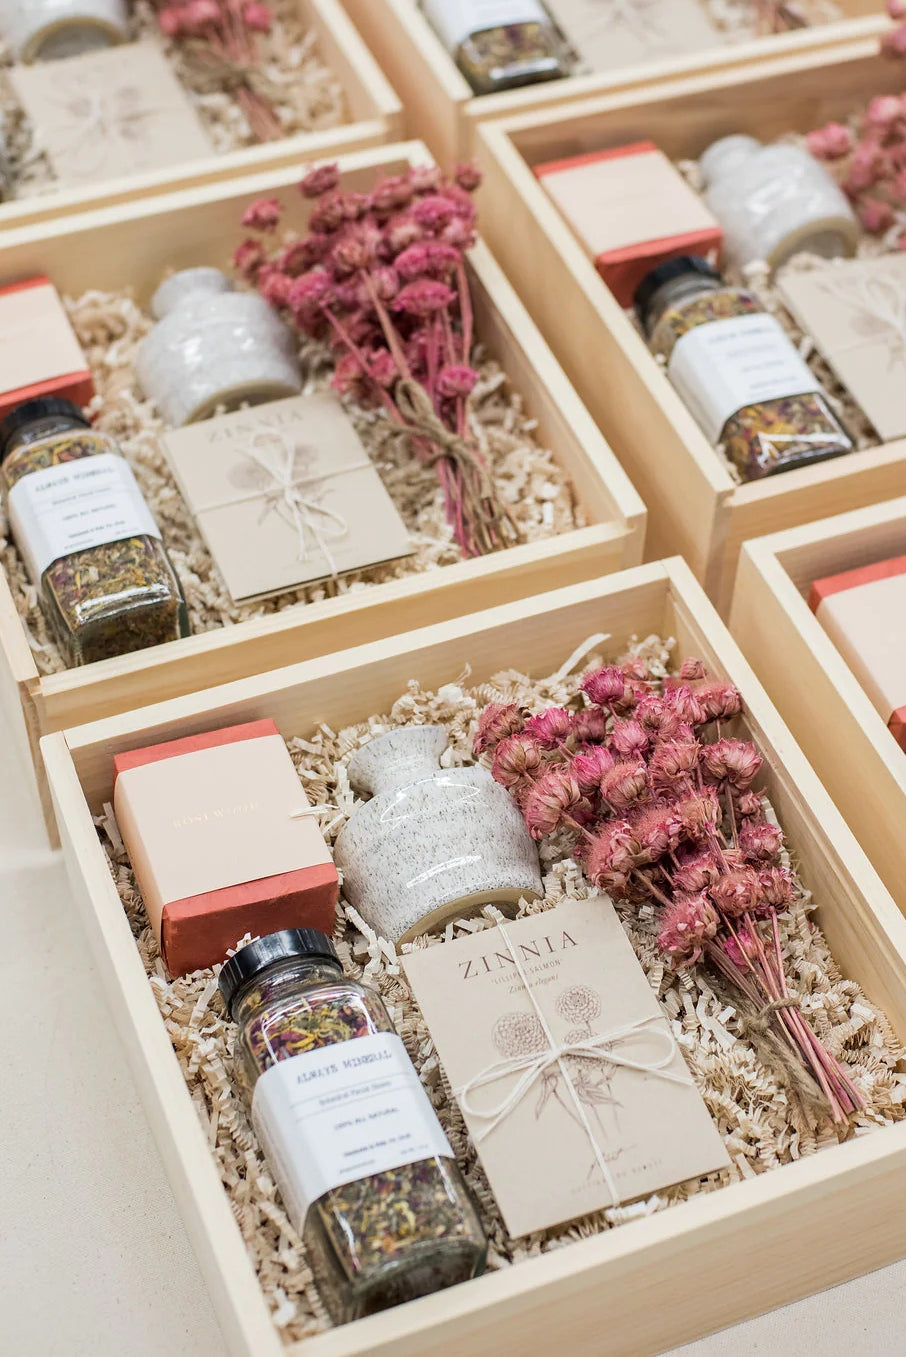 Custom business gifts for floral designer for customer appreciation by Marigold & Grey